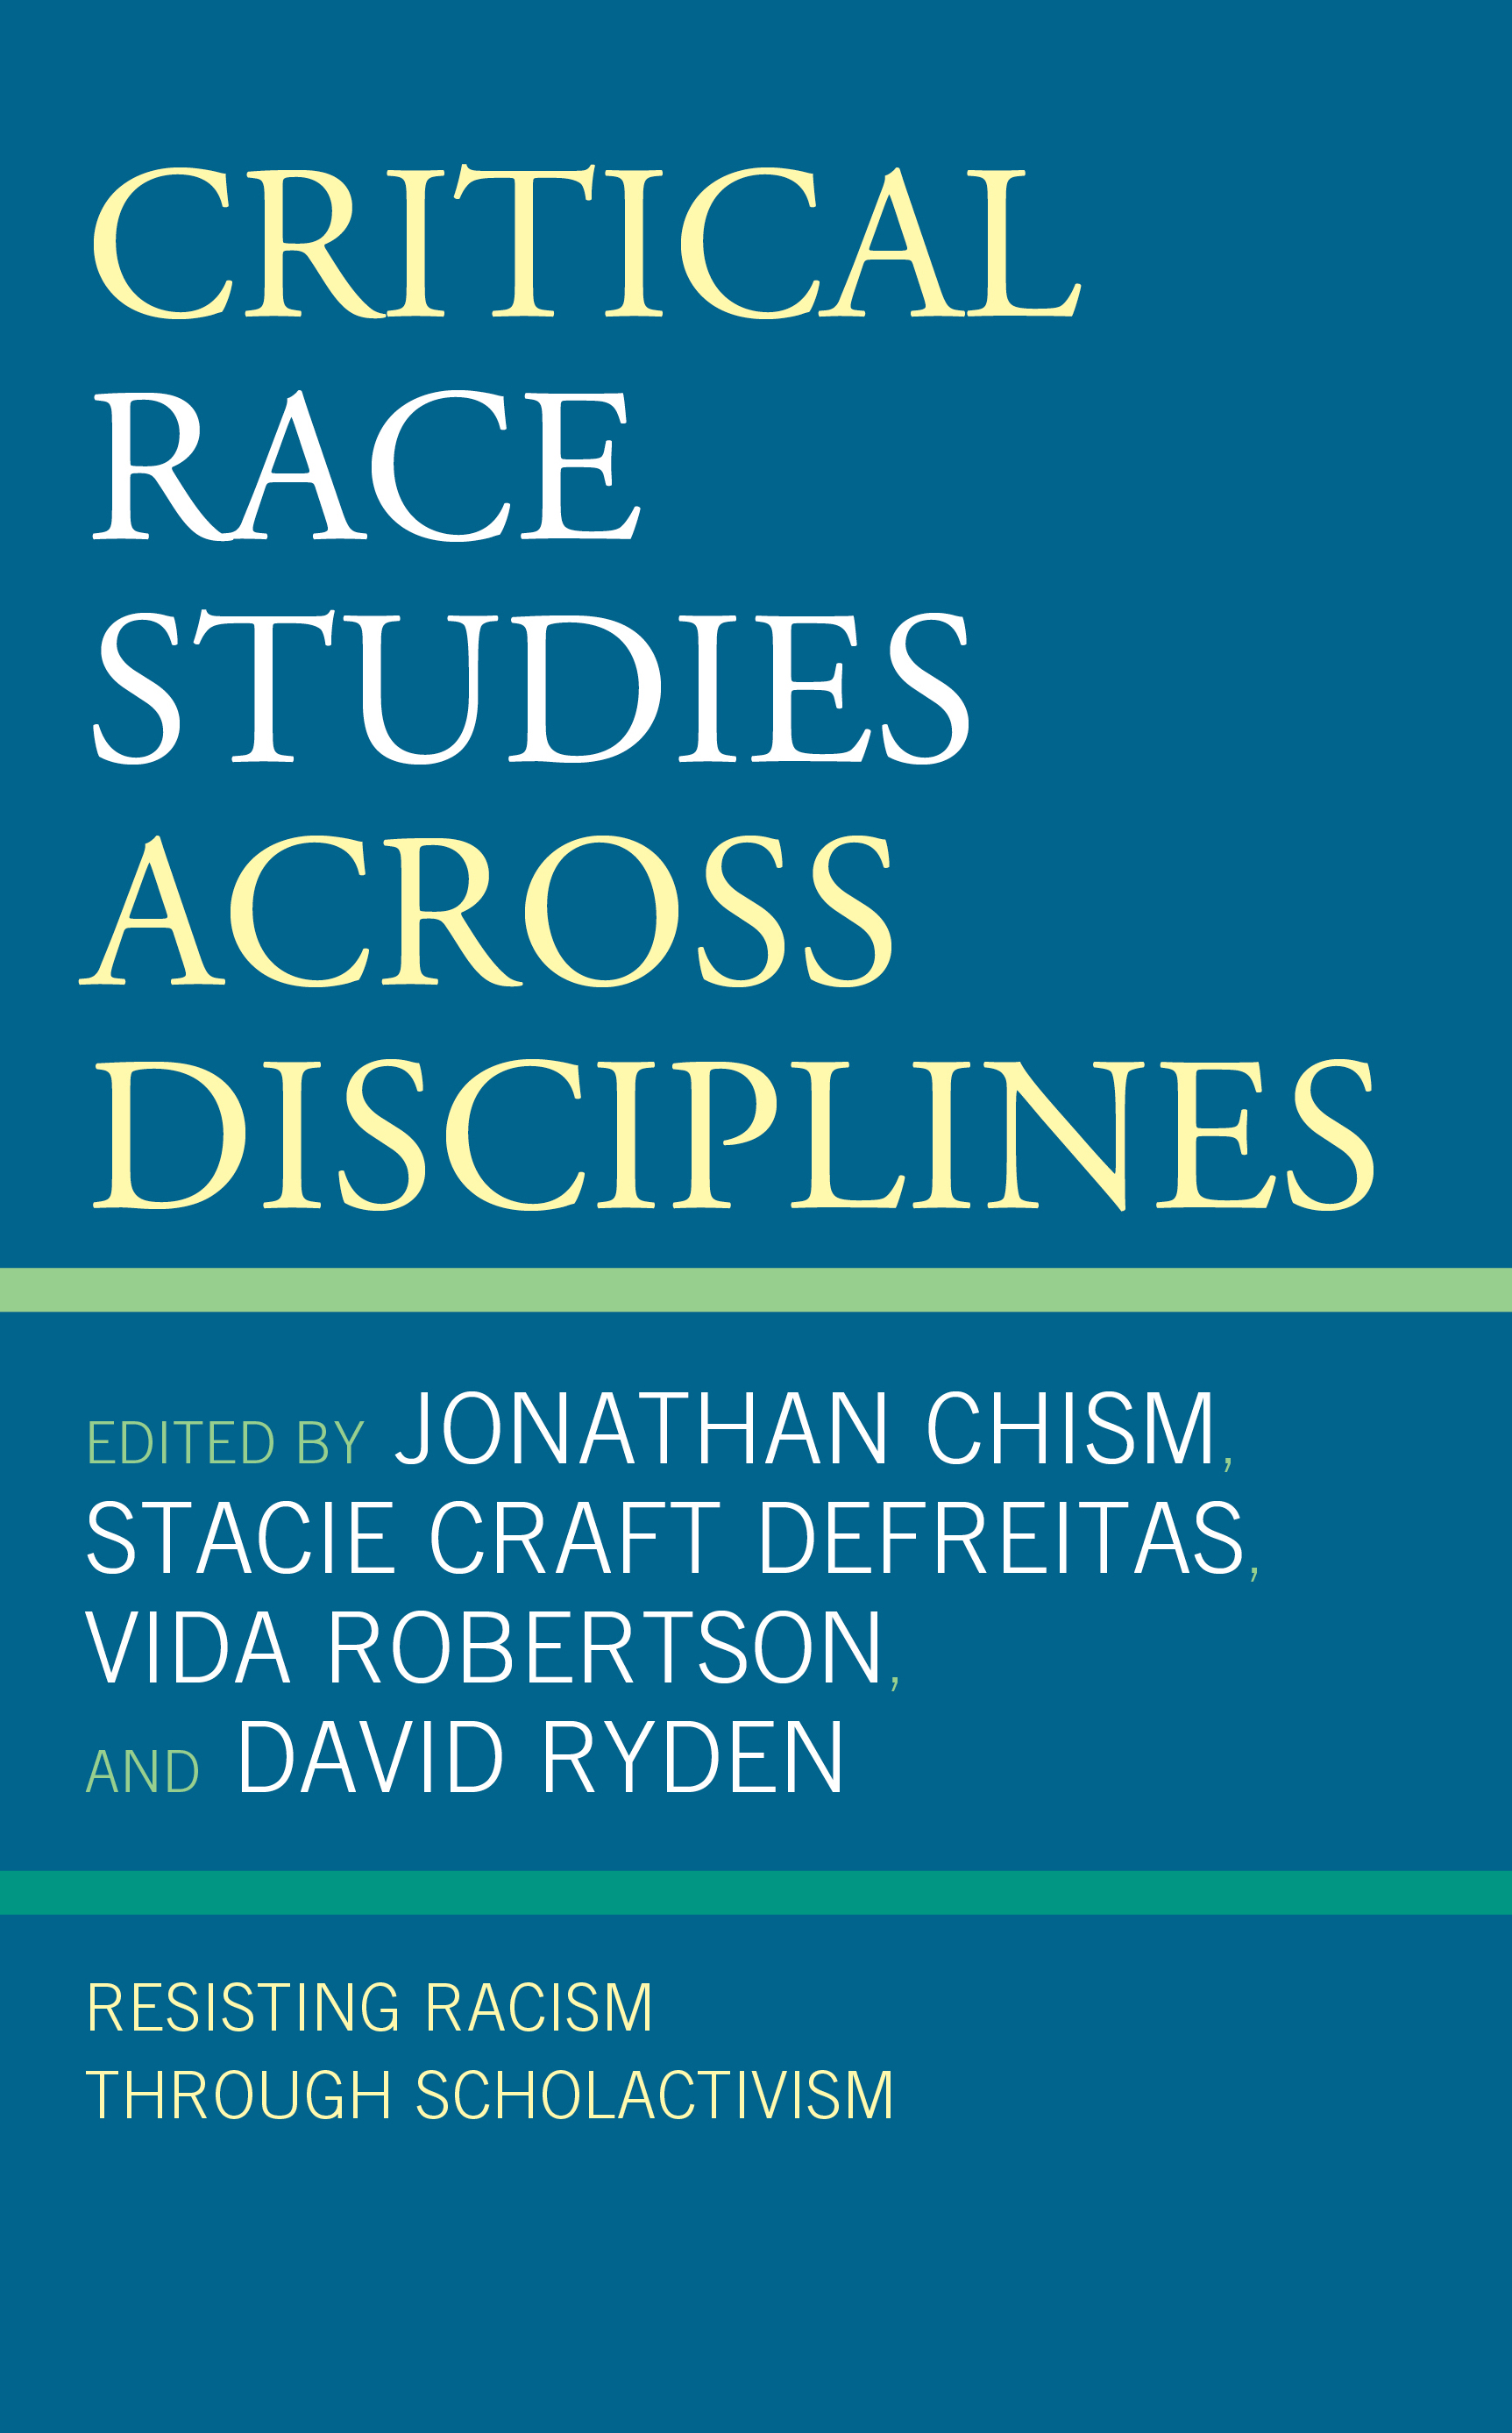 Critical Race Studies Across Disciplines: Resisting Racism through Scholactivism